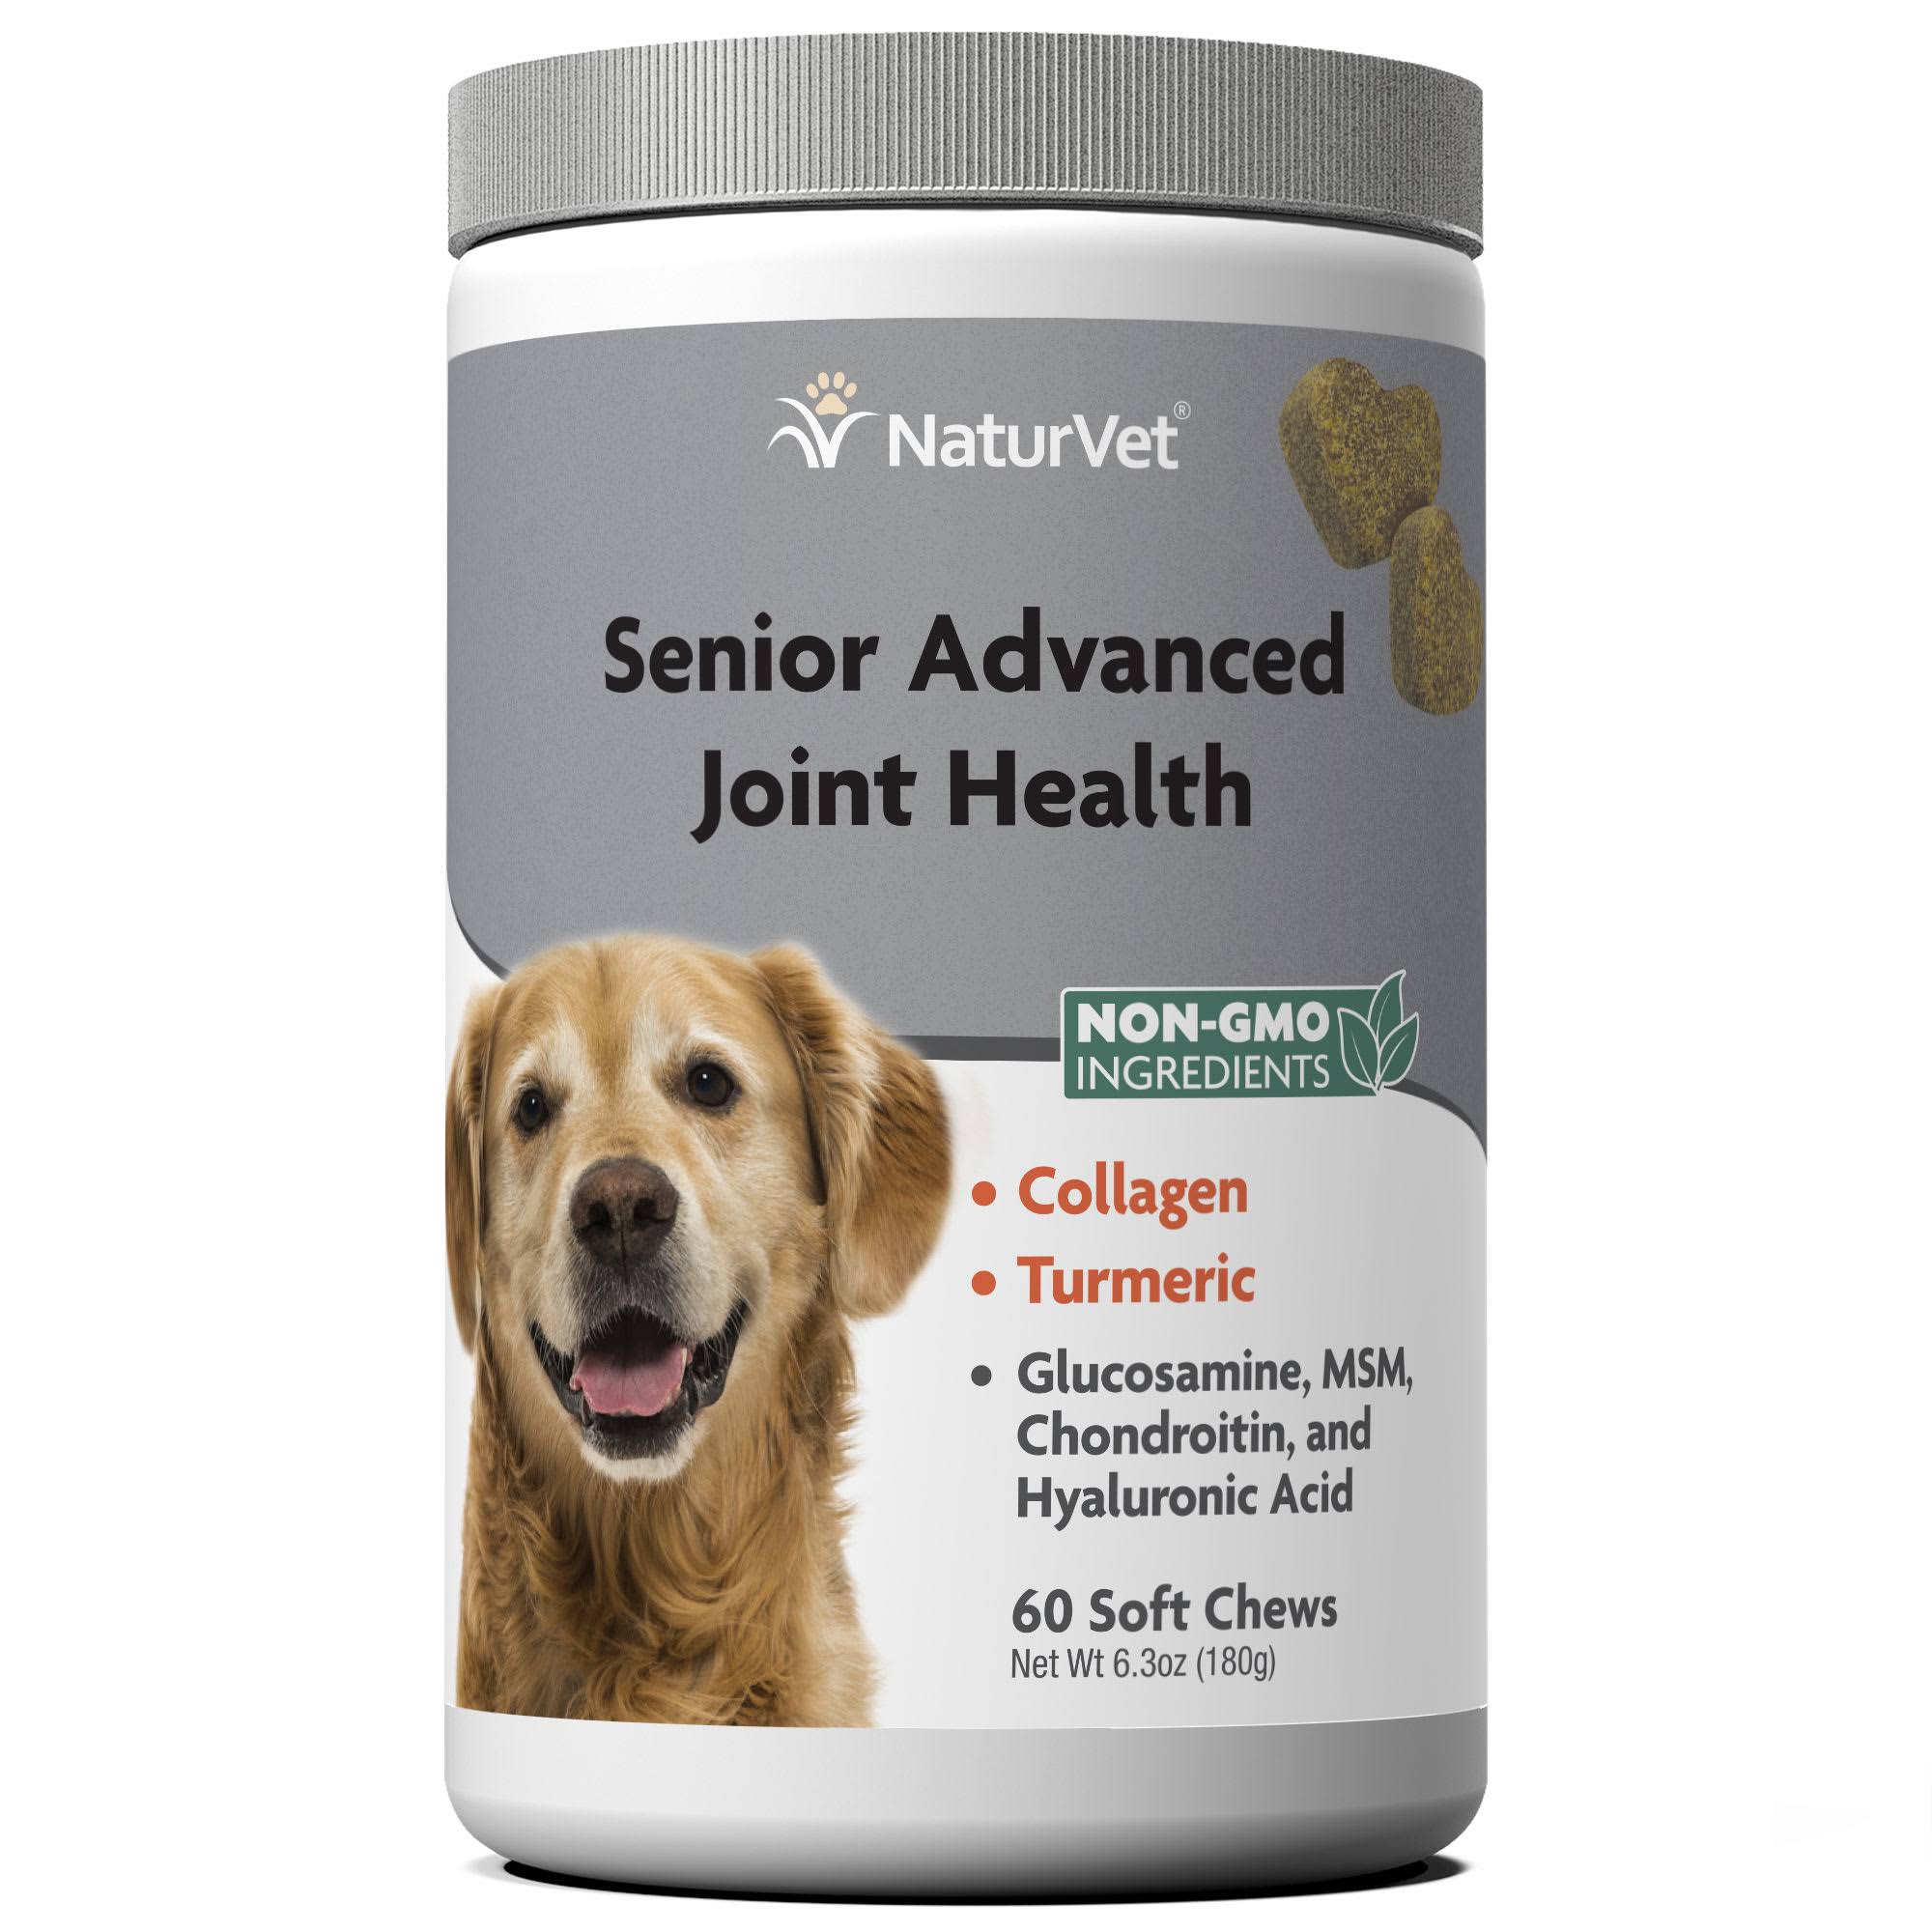 NaturVet Senior Advanced Joint Health Soft Chew Dog Supplement - 60 Count